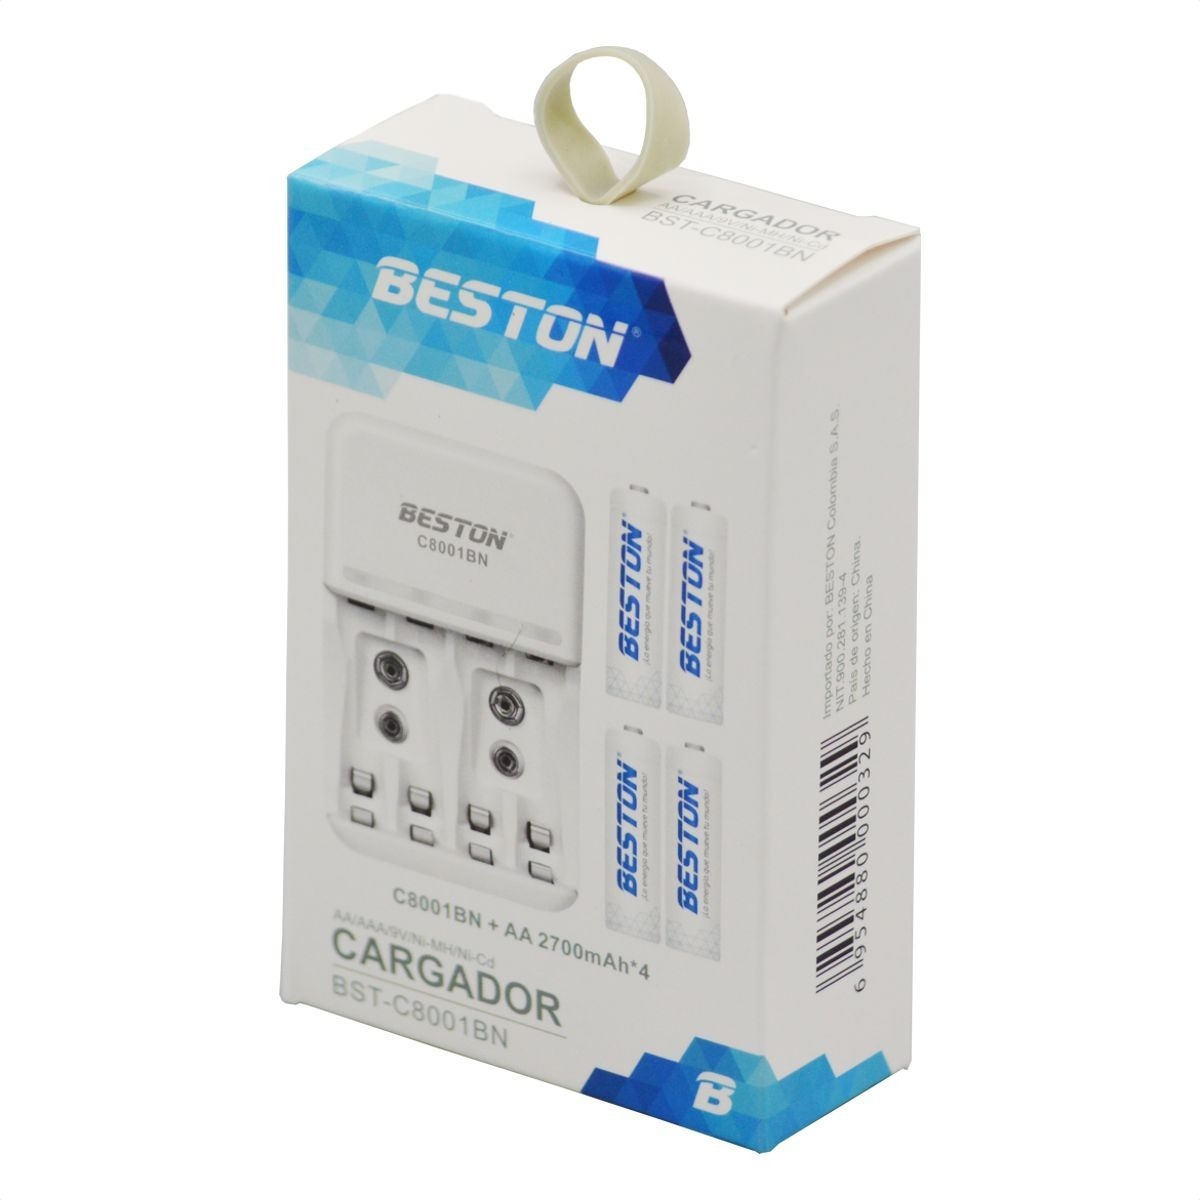 Cargador Beston BST-C8001BN